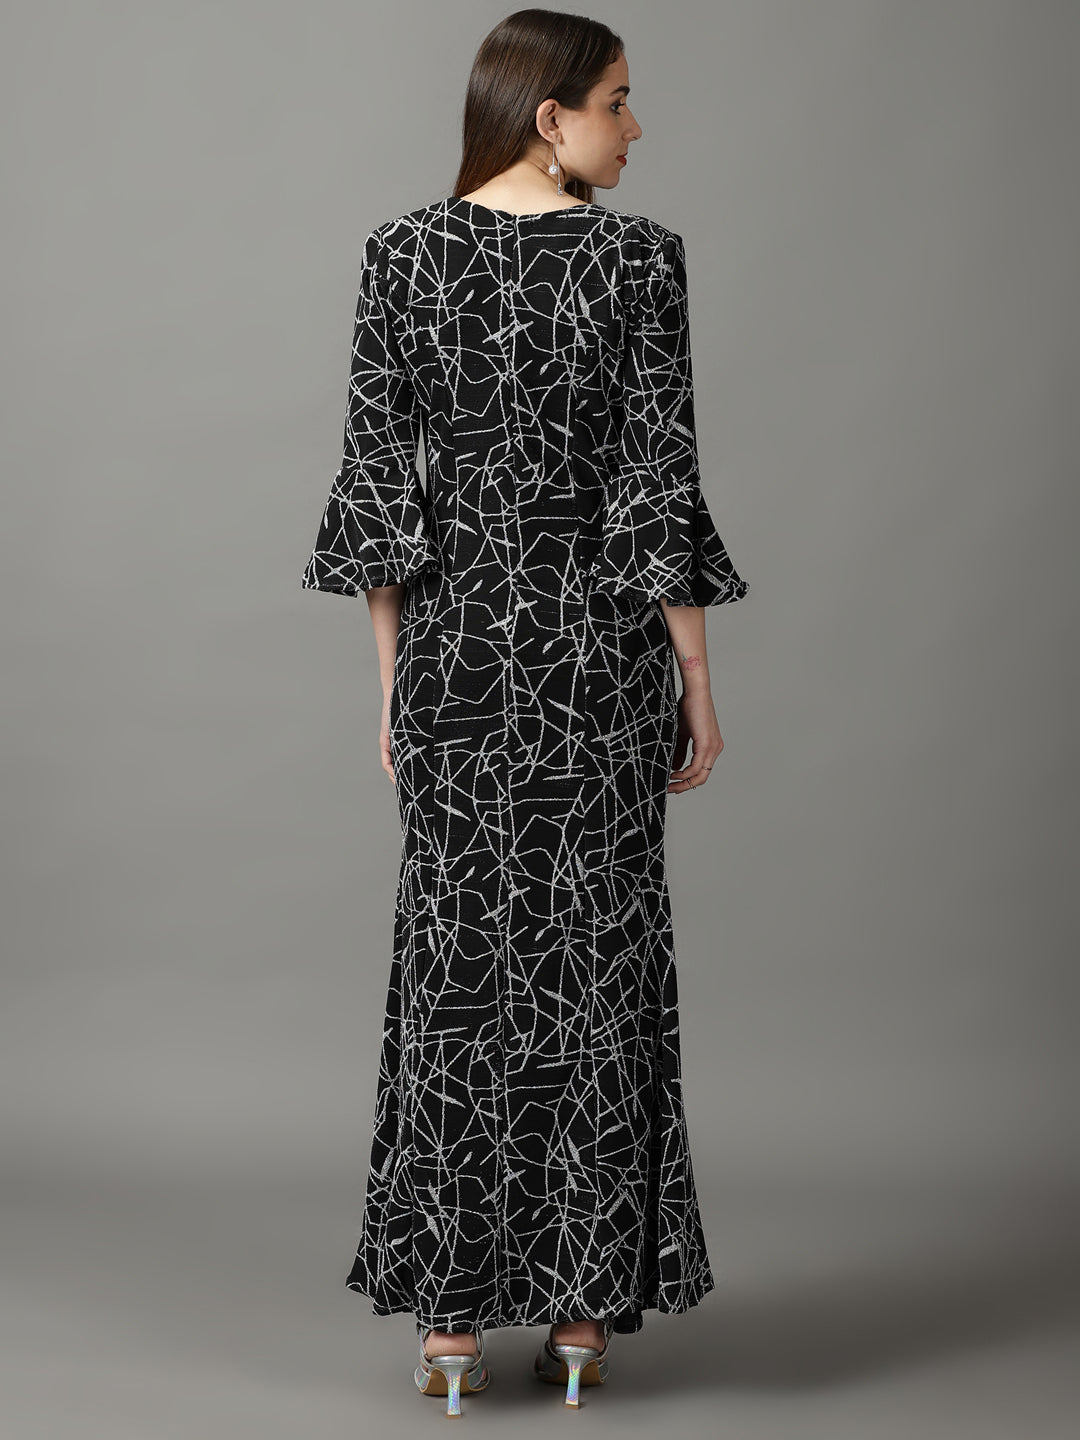 Women's Black Embellished Bodycon Dress